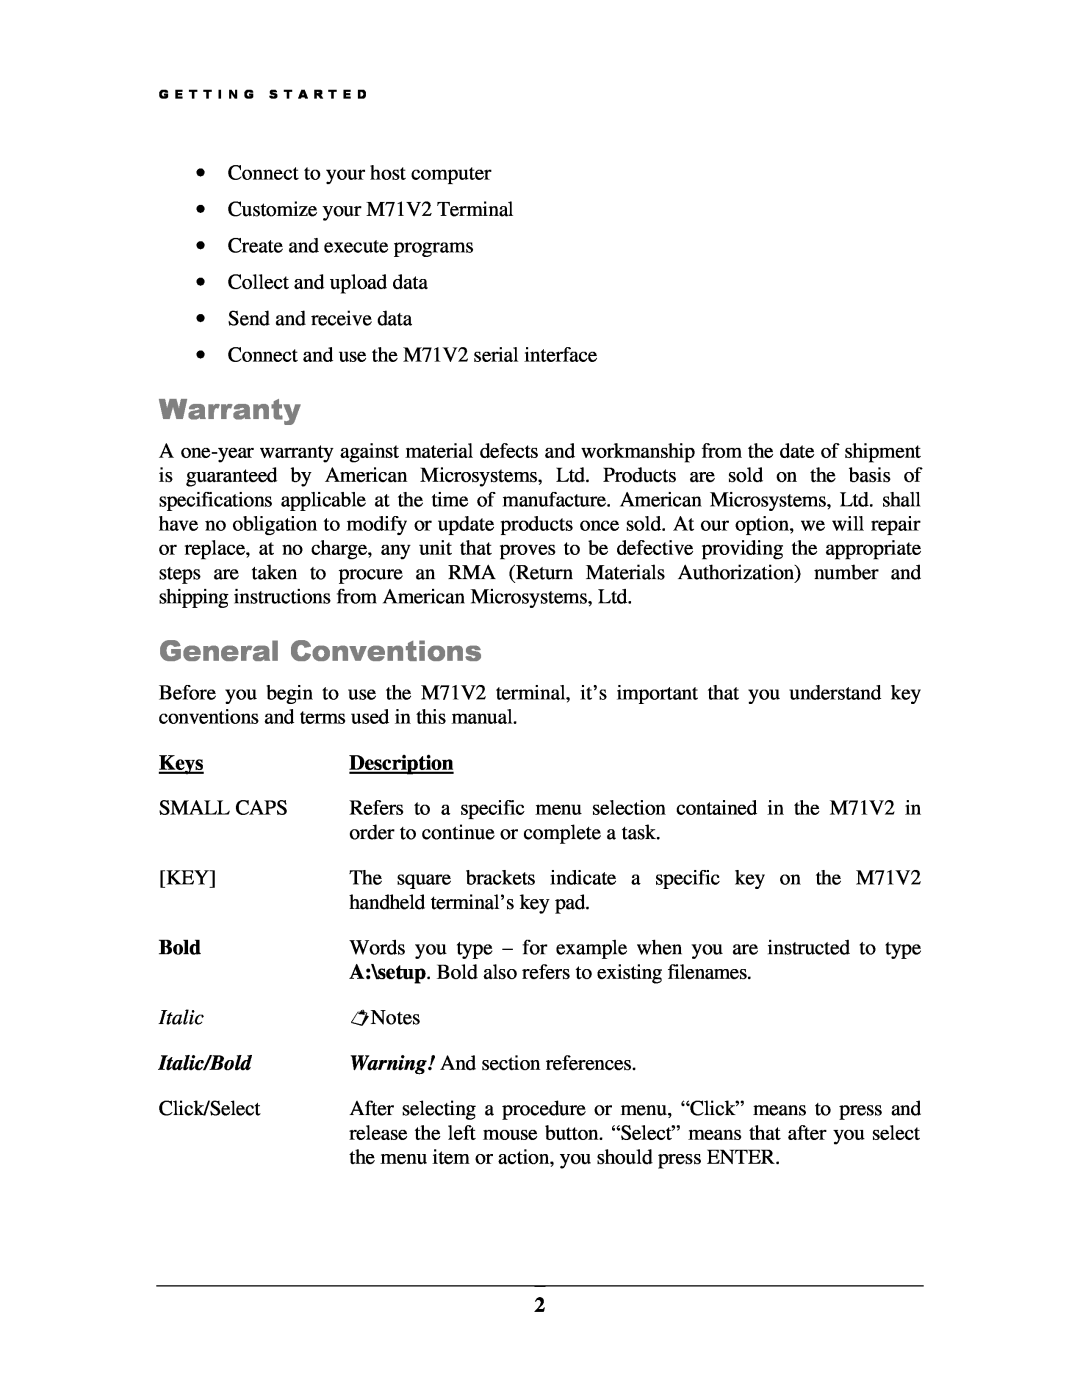 IBM M71V2 manual Warranty, General Conventions, Keys, Description, Italic/Bold 